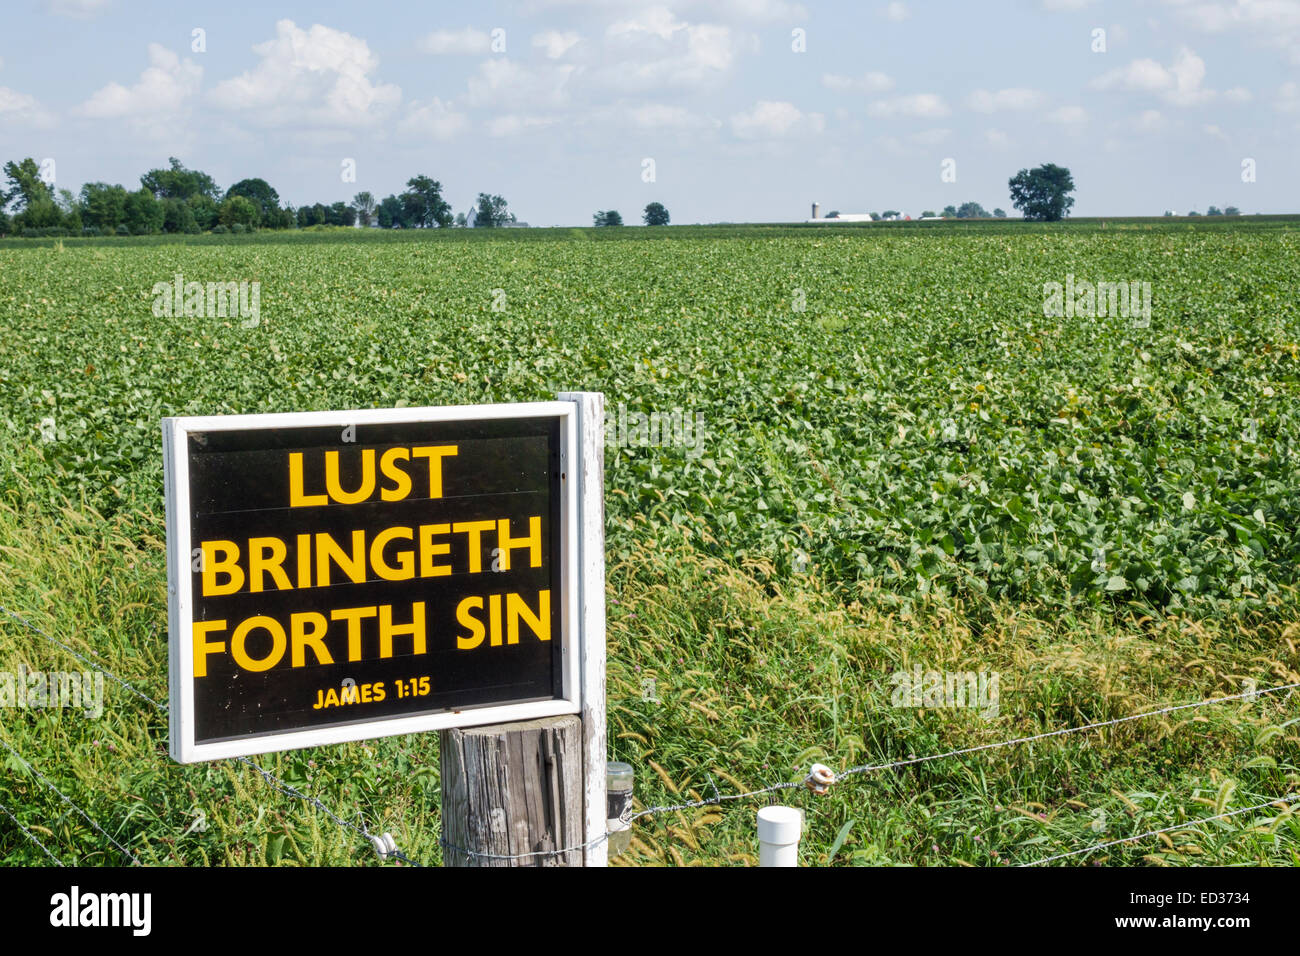 Illinois Arthur,rural,road,farm field,sign,James 1:15,bible,biblical quote,lust bringeth forth sin,IL140904068 Stock Photo